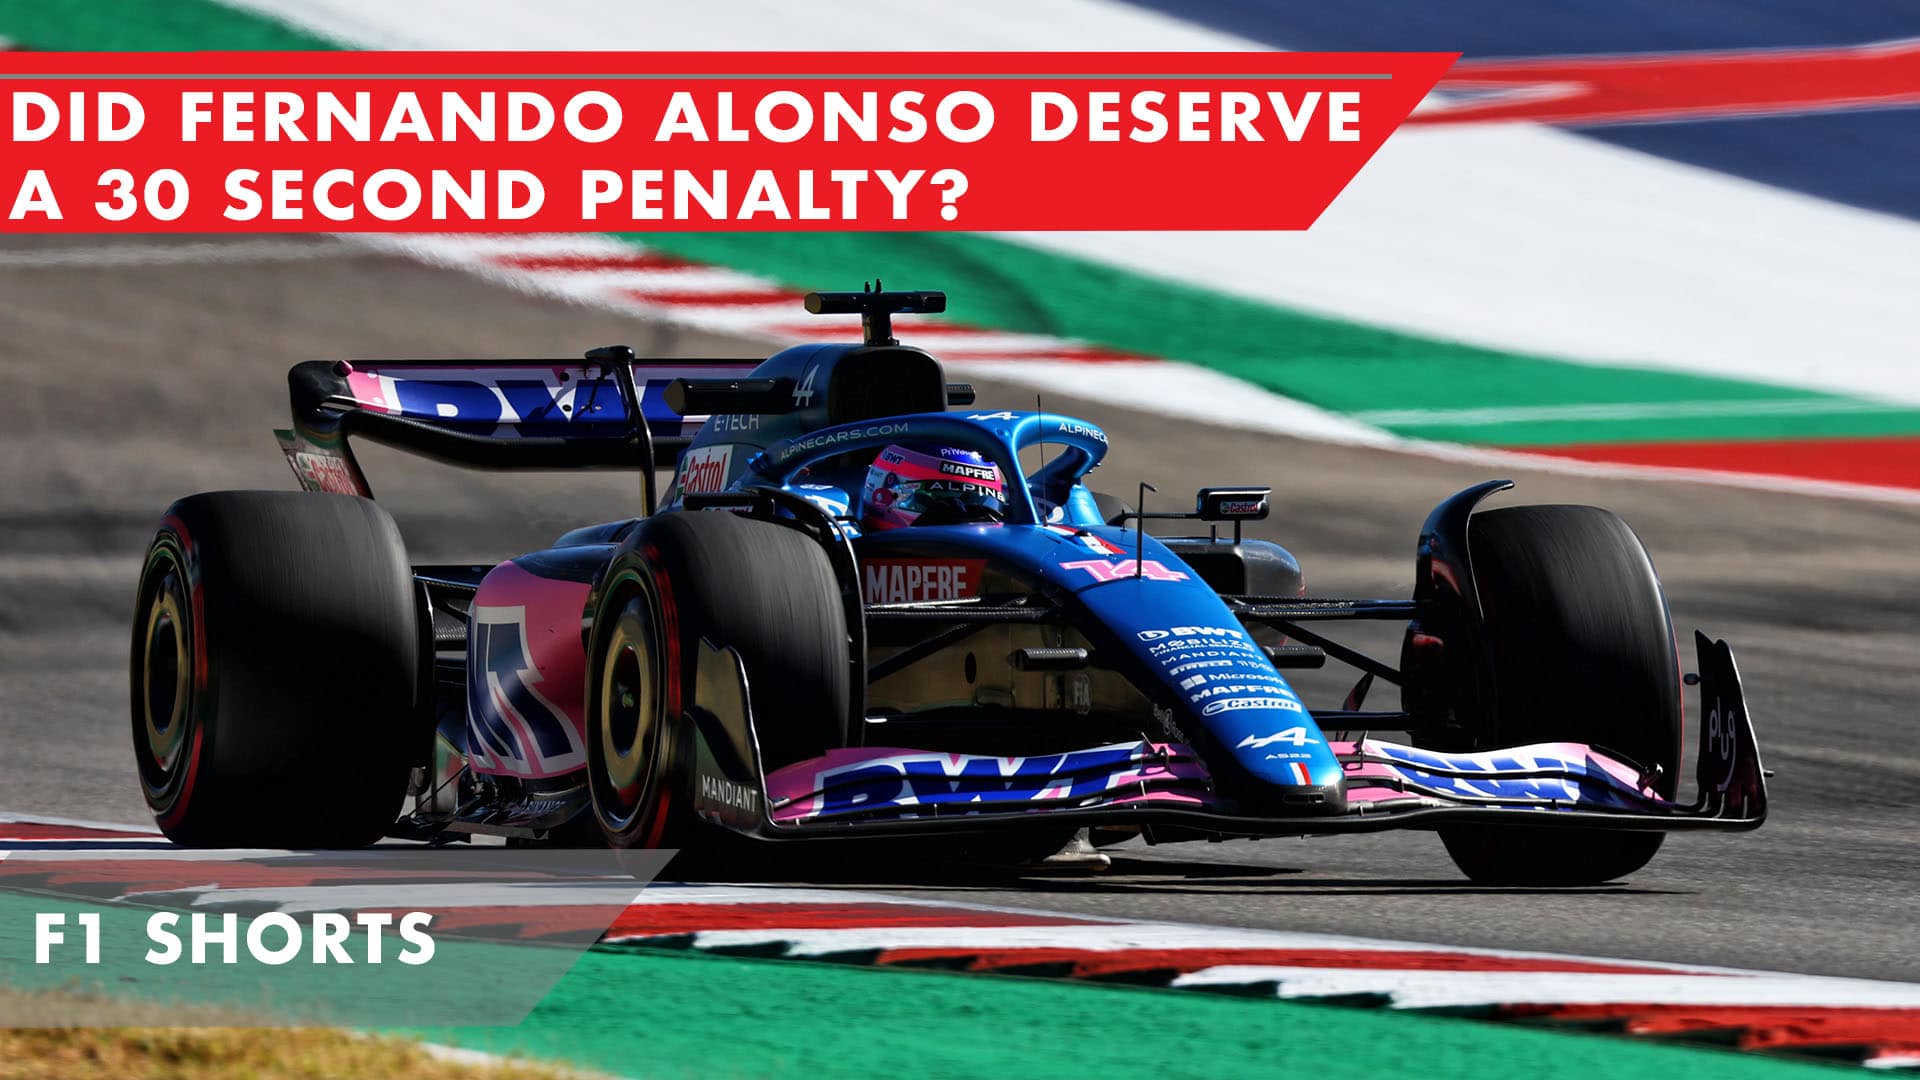 Did Fernando Alonso deserve a 30 second penalty?